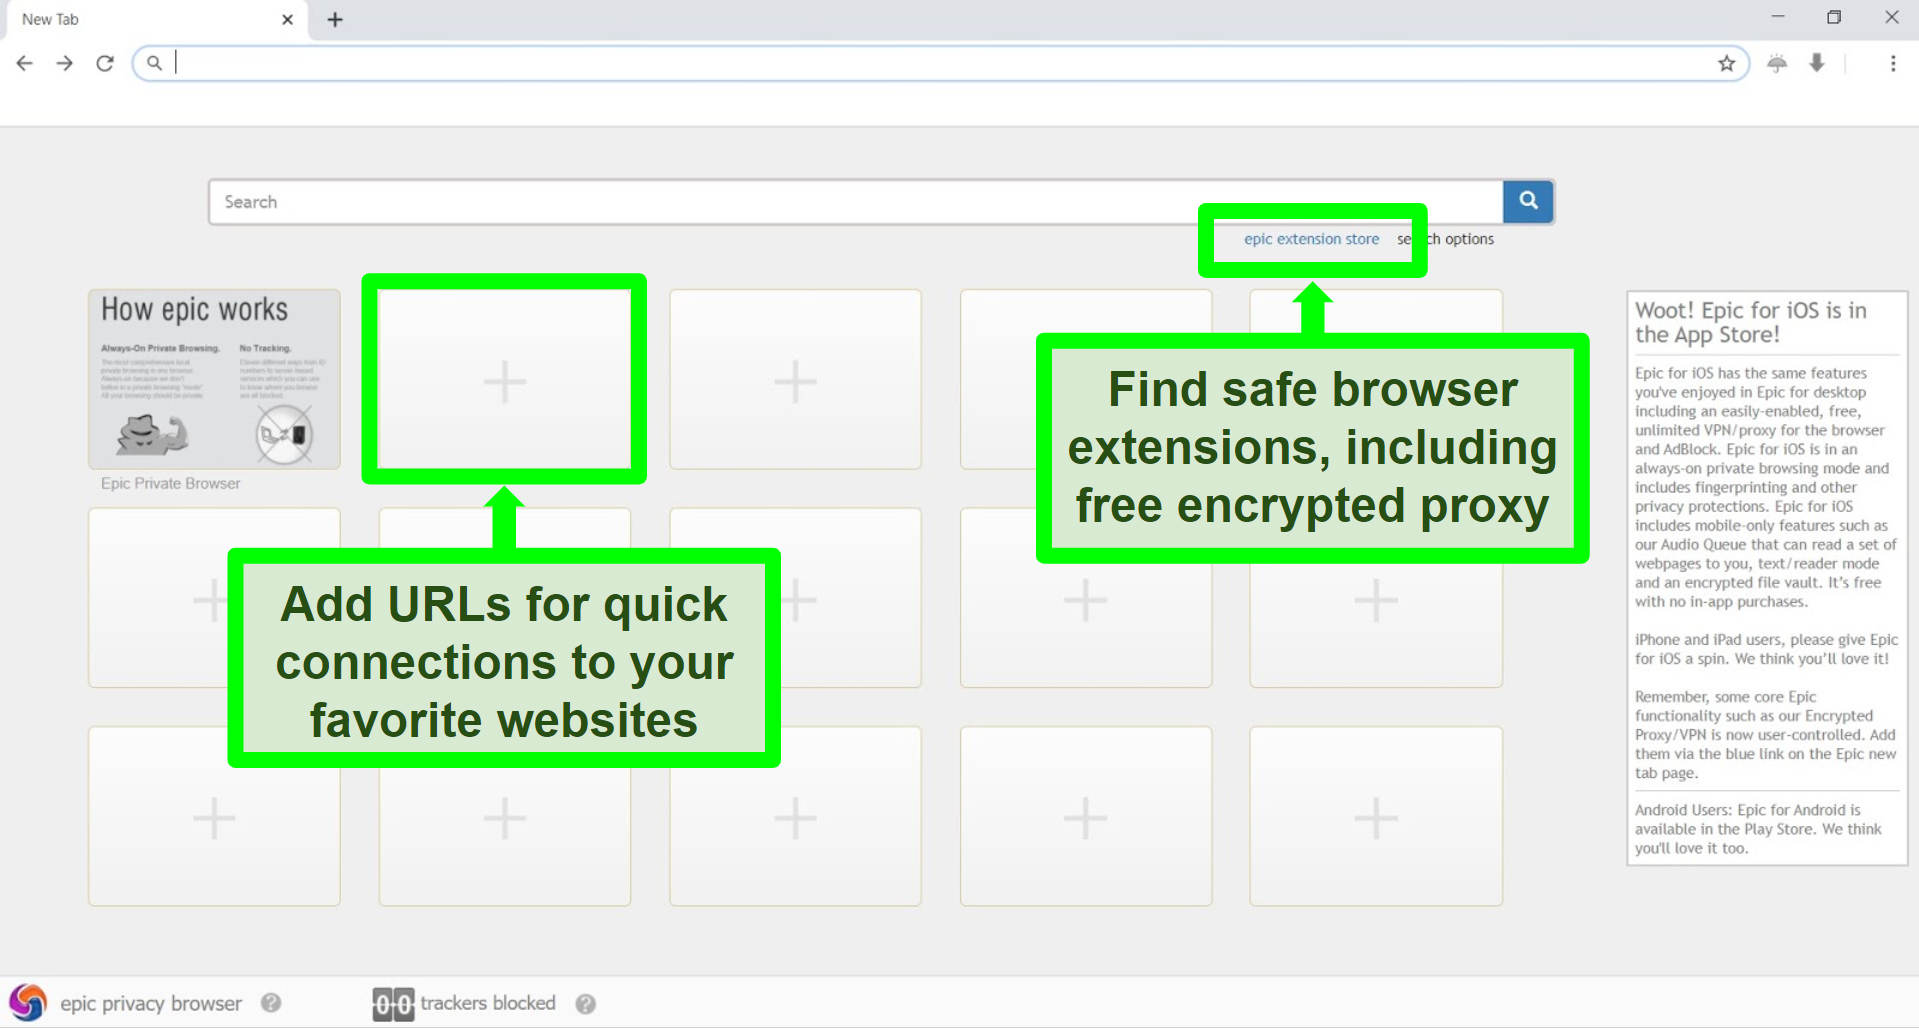 chrome browser privacy